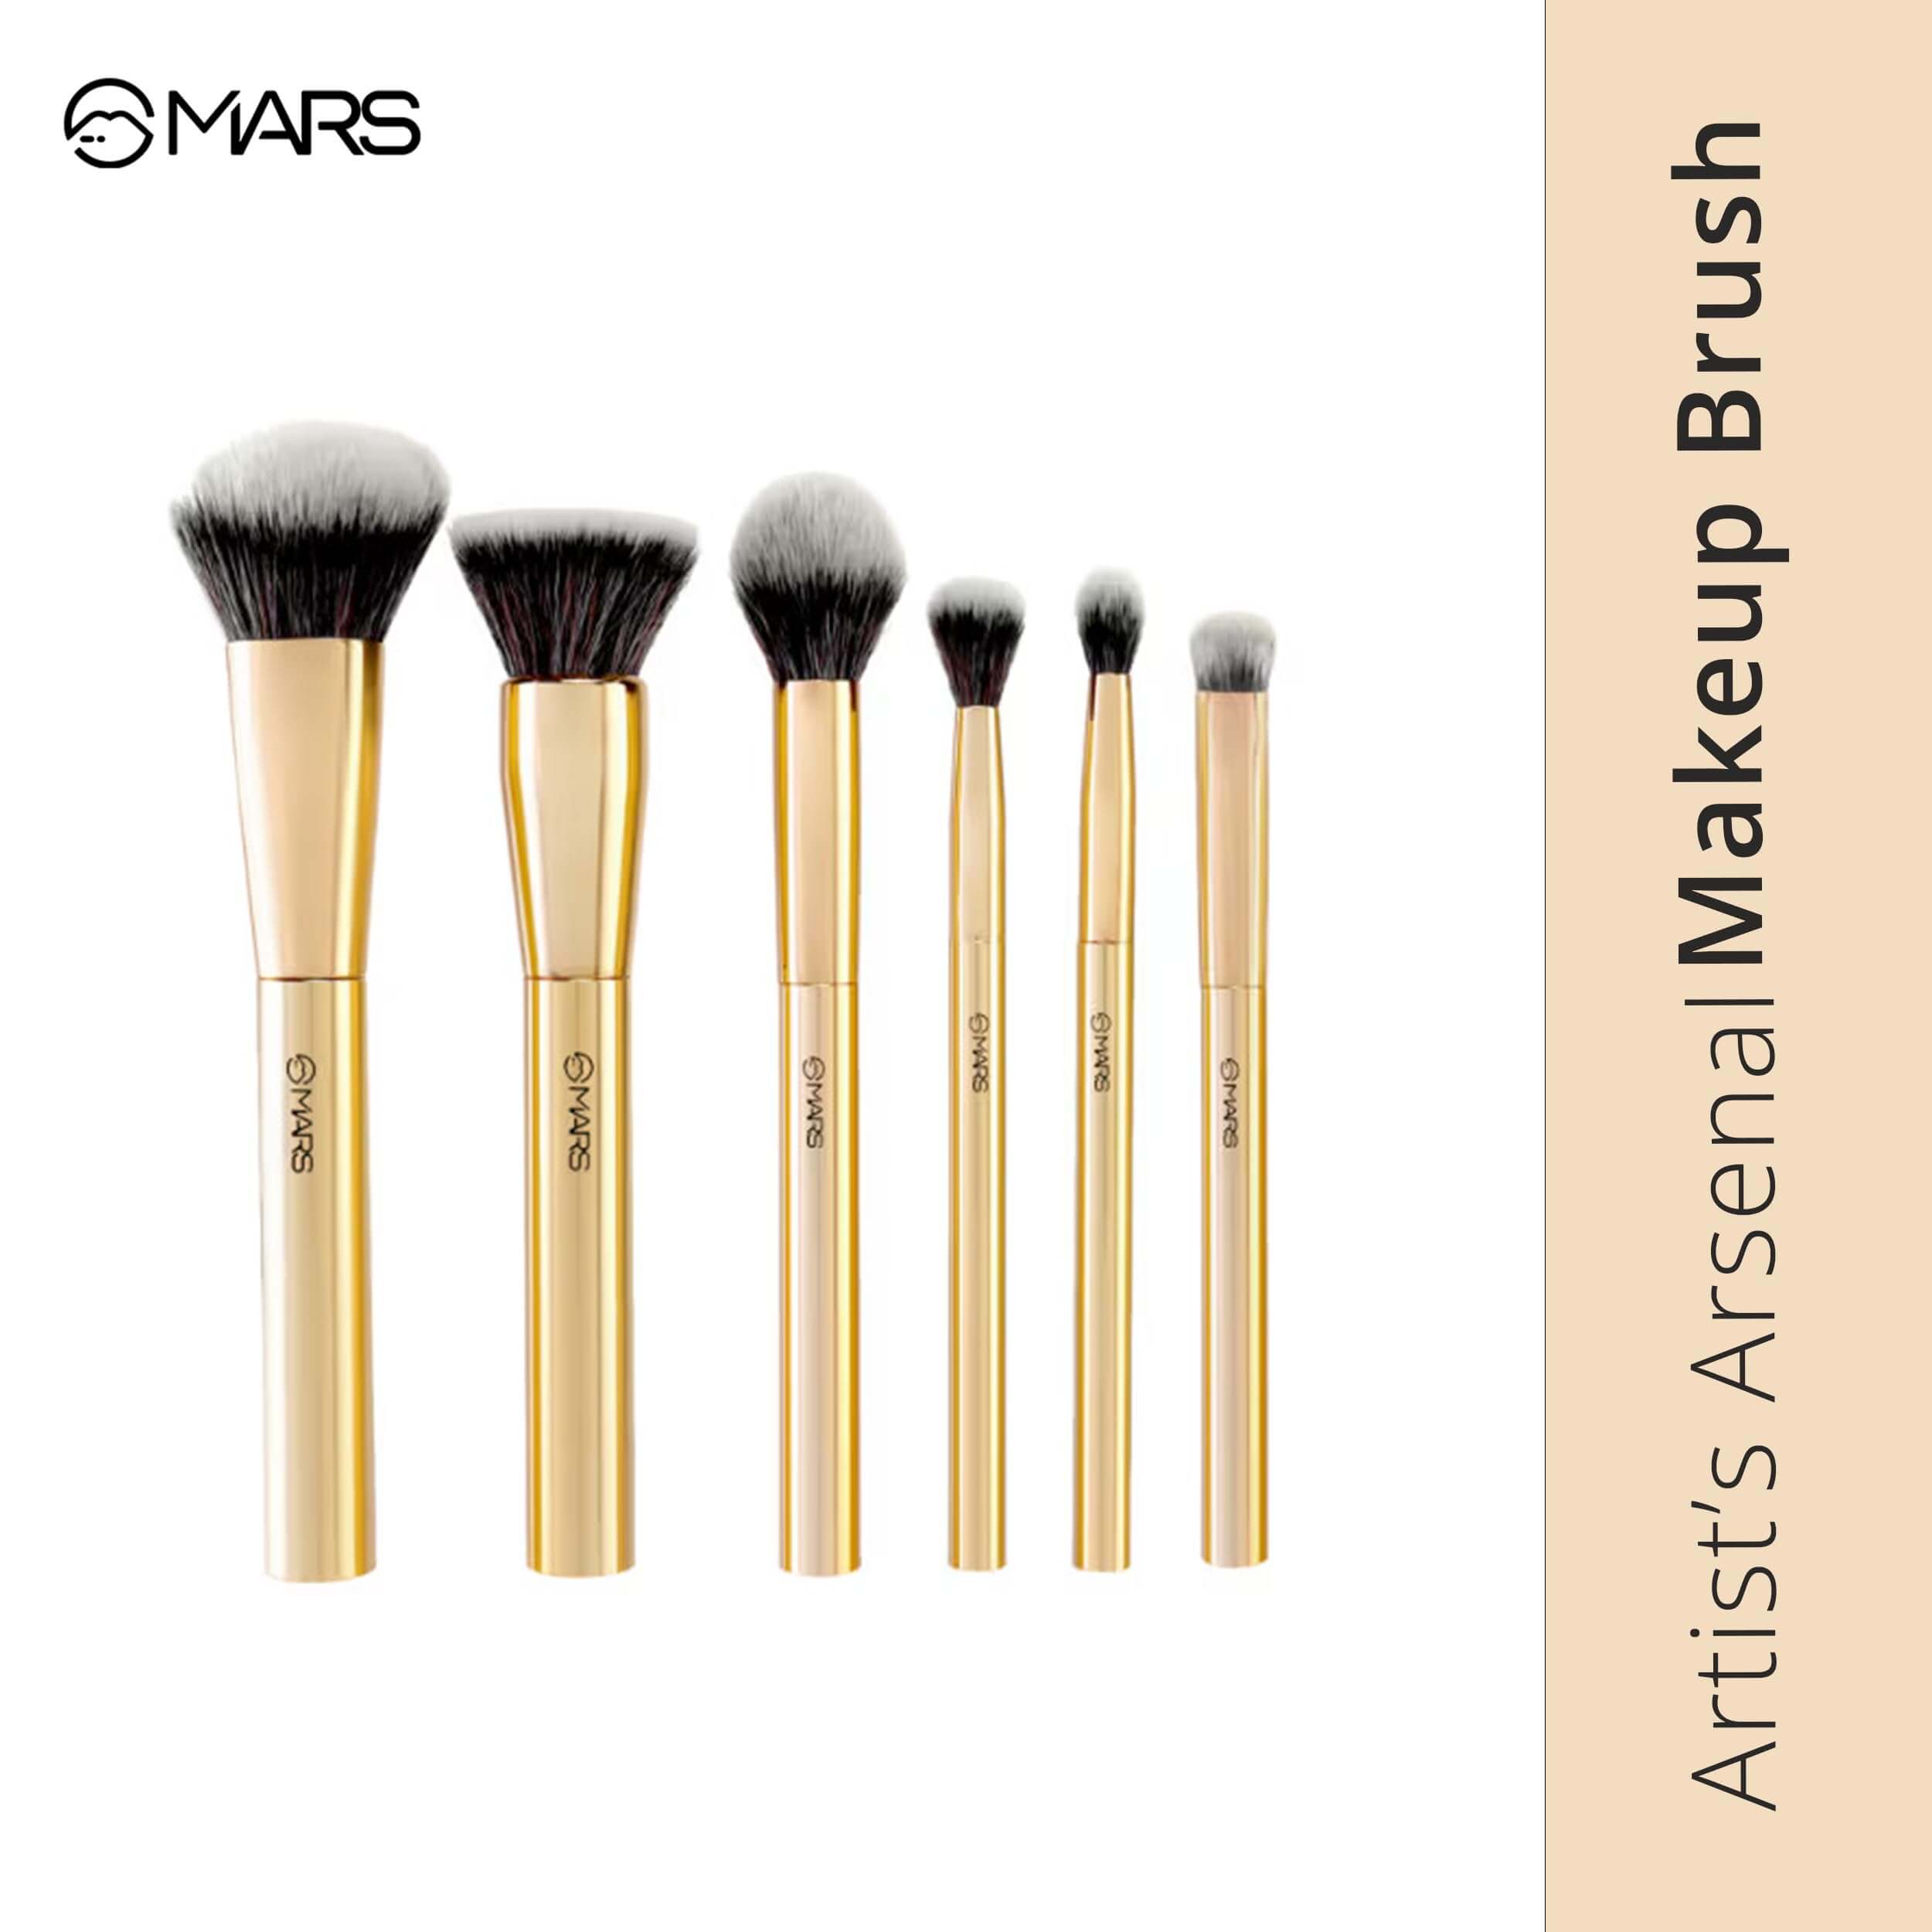 mars artist's arsenal 6-in-1 makeup brush set